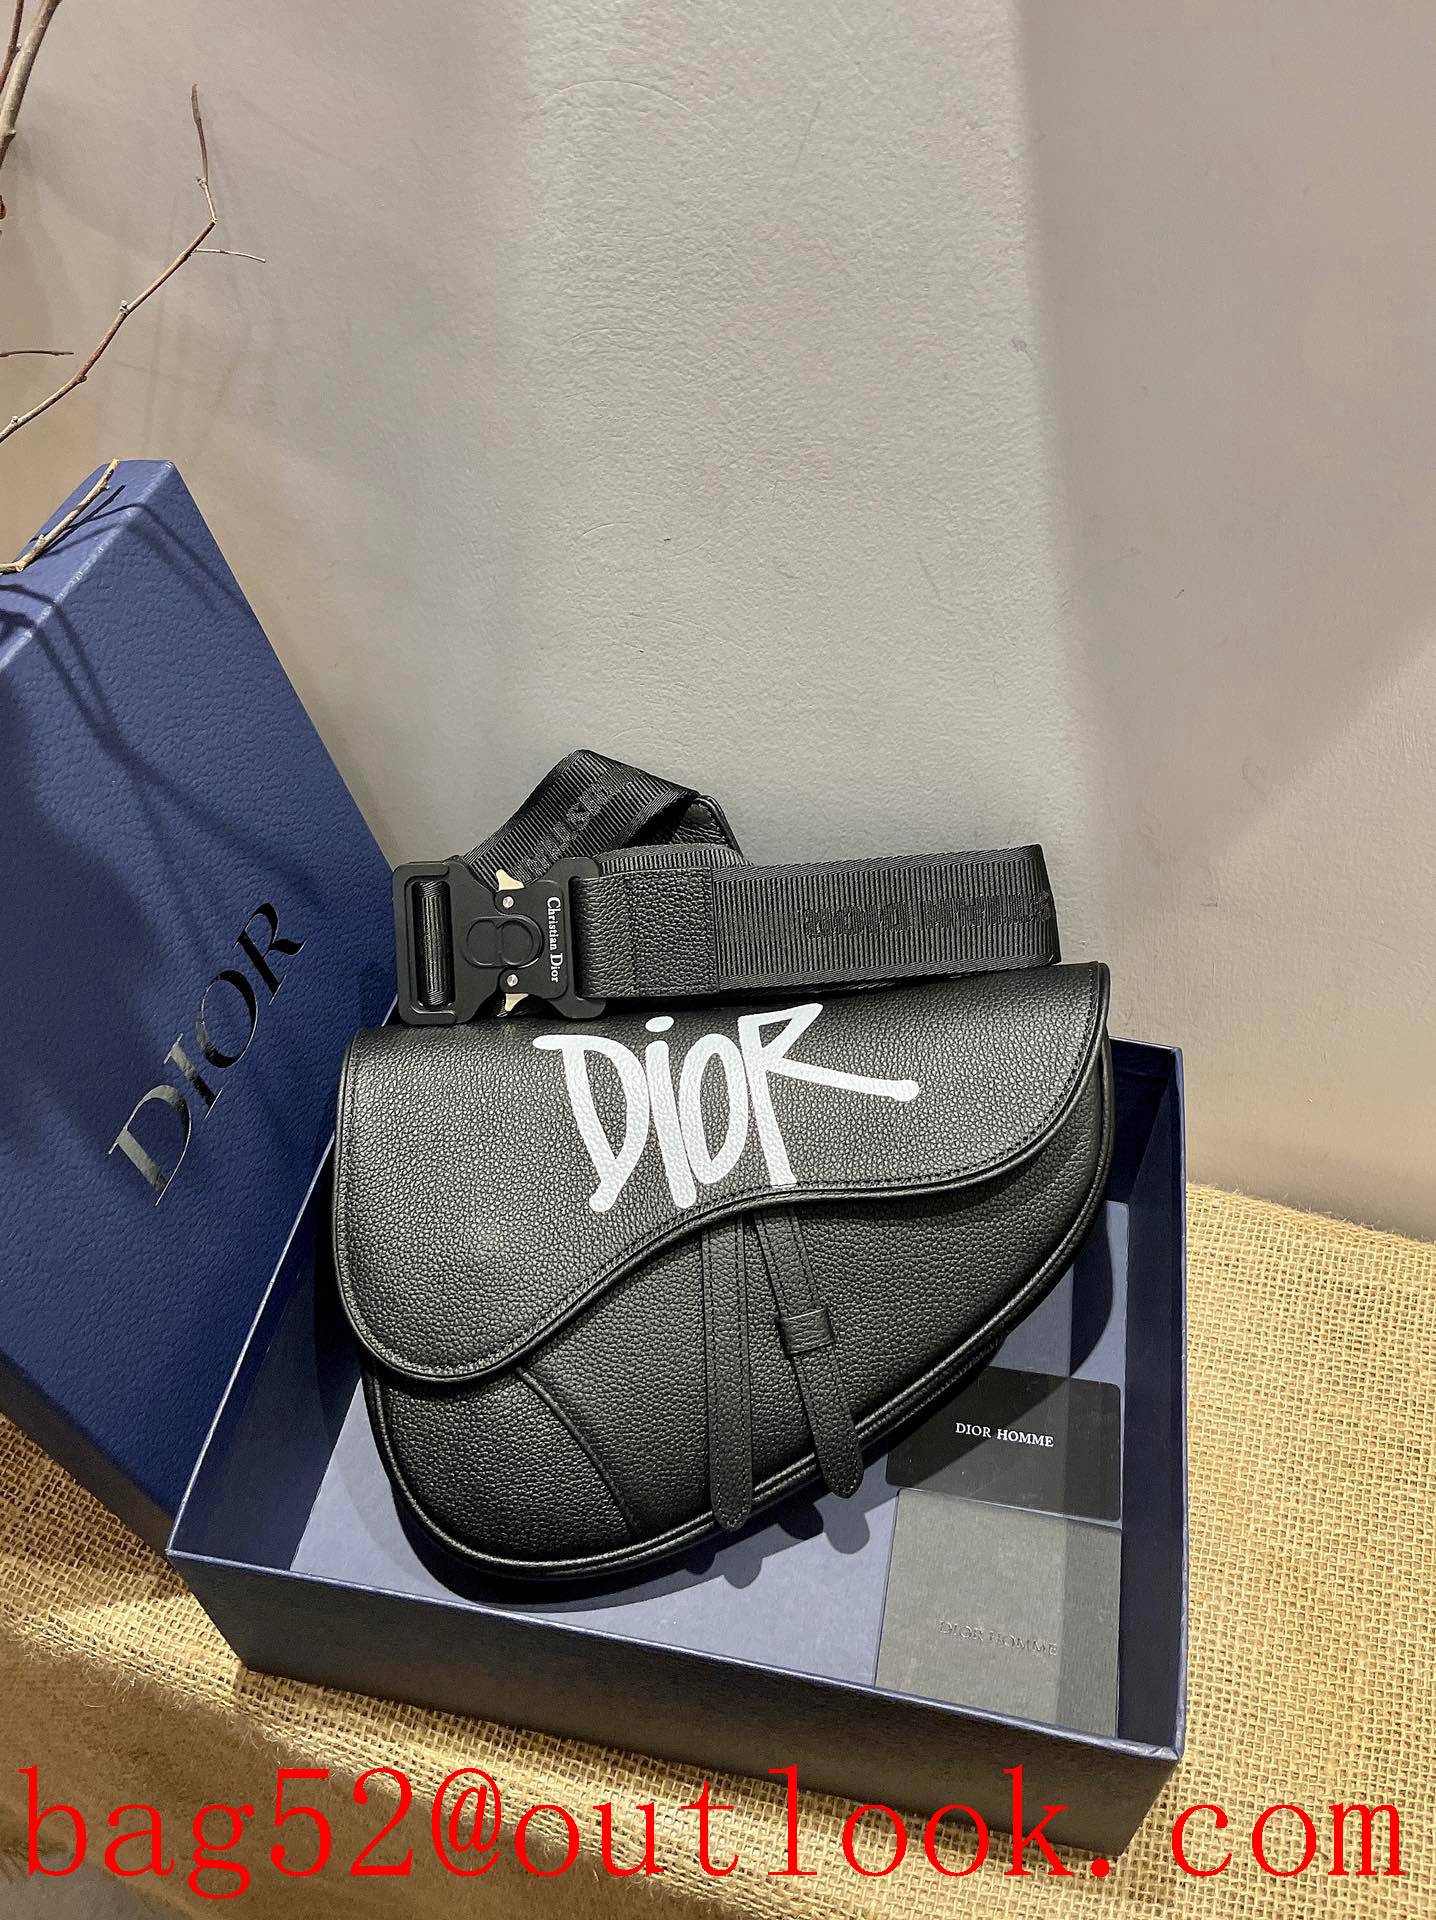 Dior men saddle black with white logo special strap buckle shoulder crossbody handbag